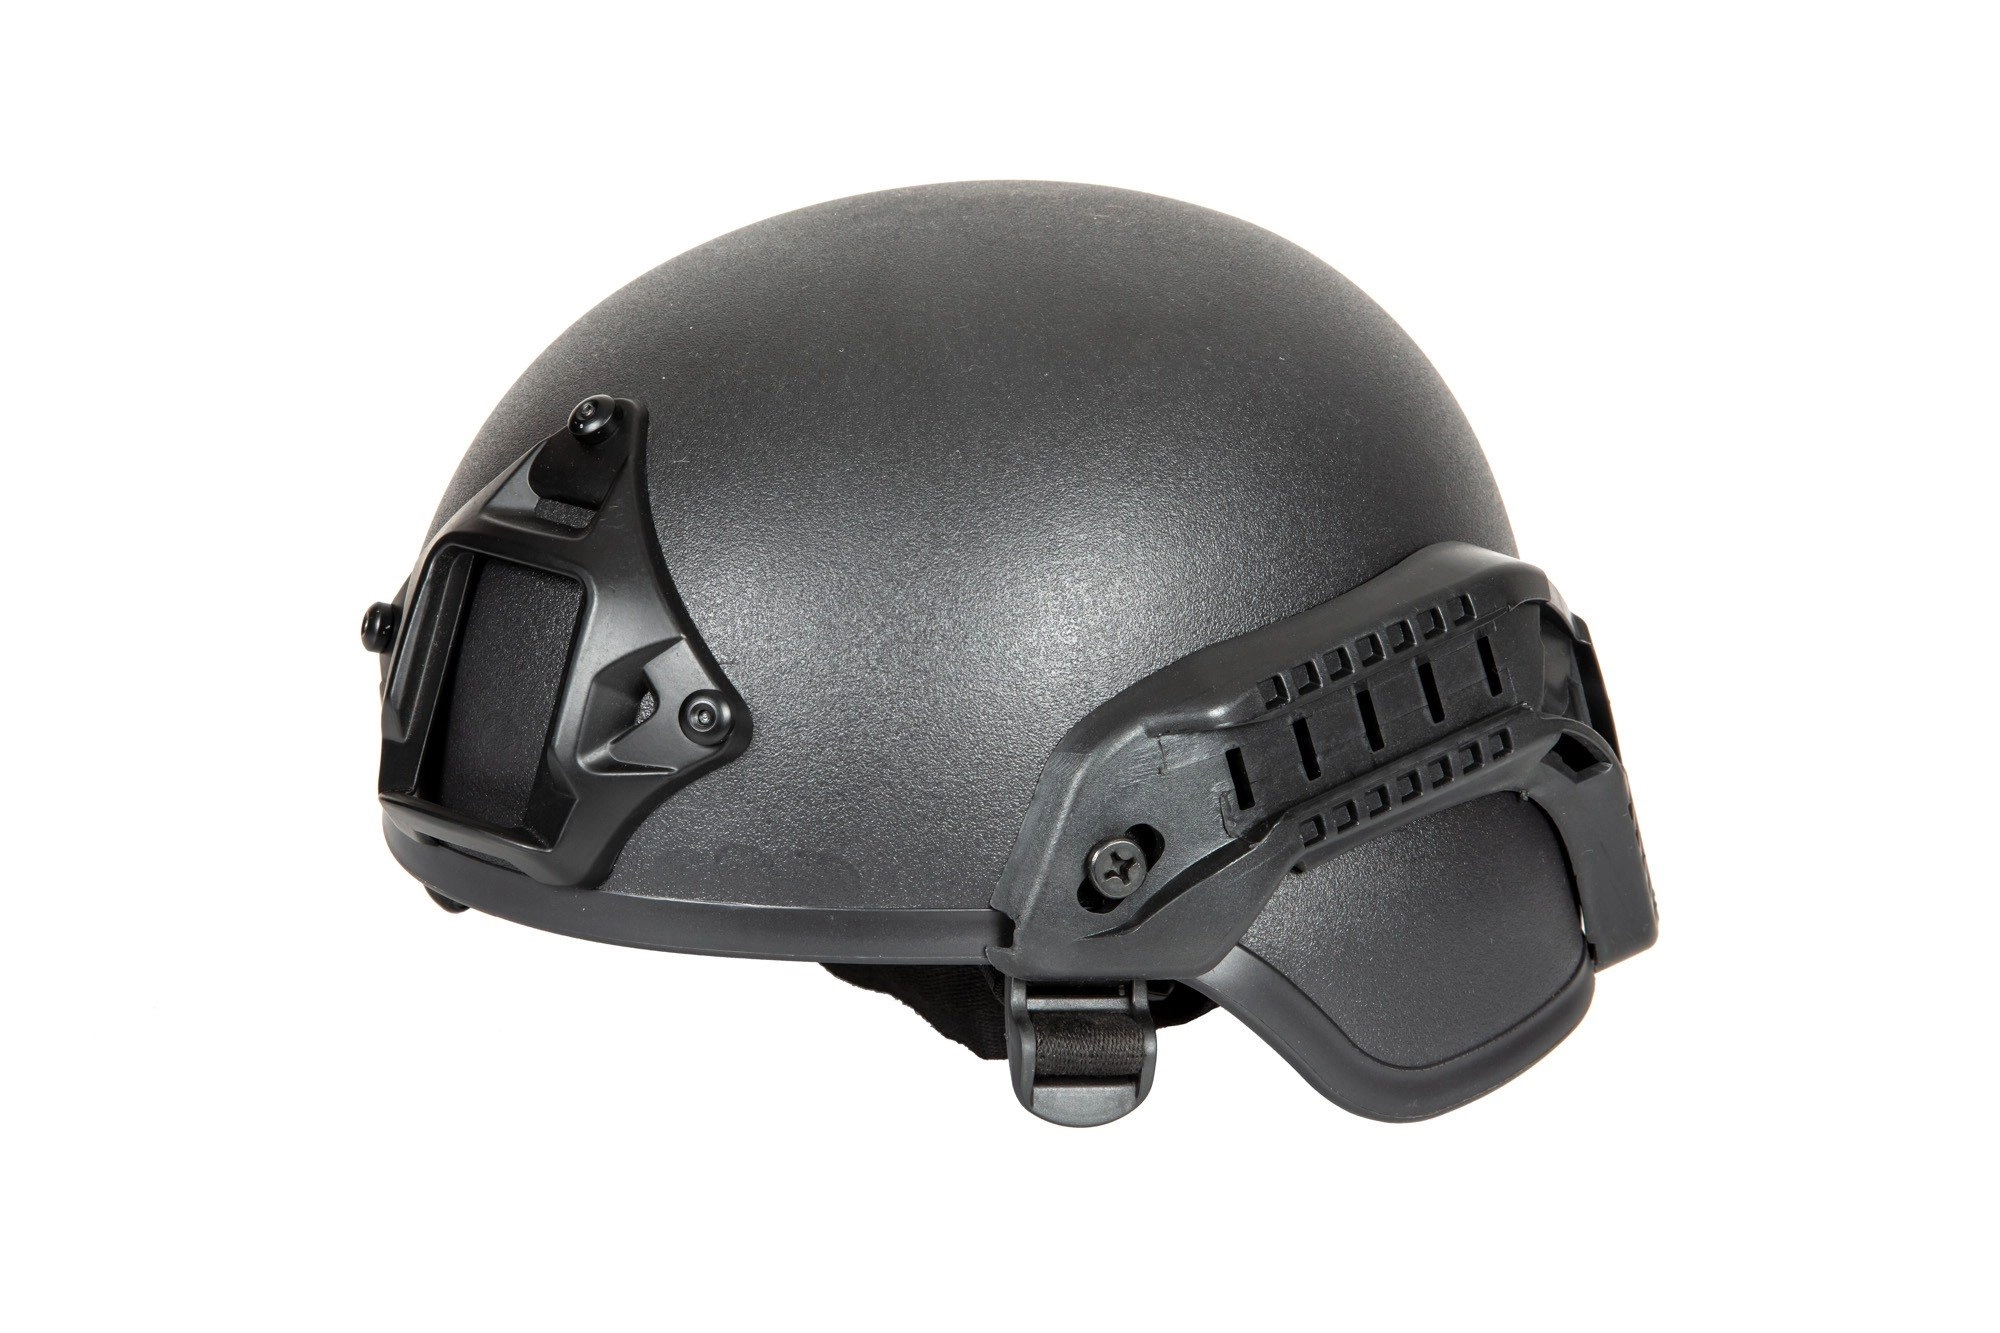 MICH 2000 Helmet Replica - Black